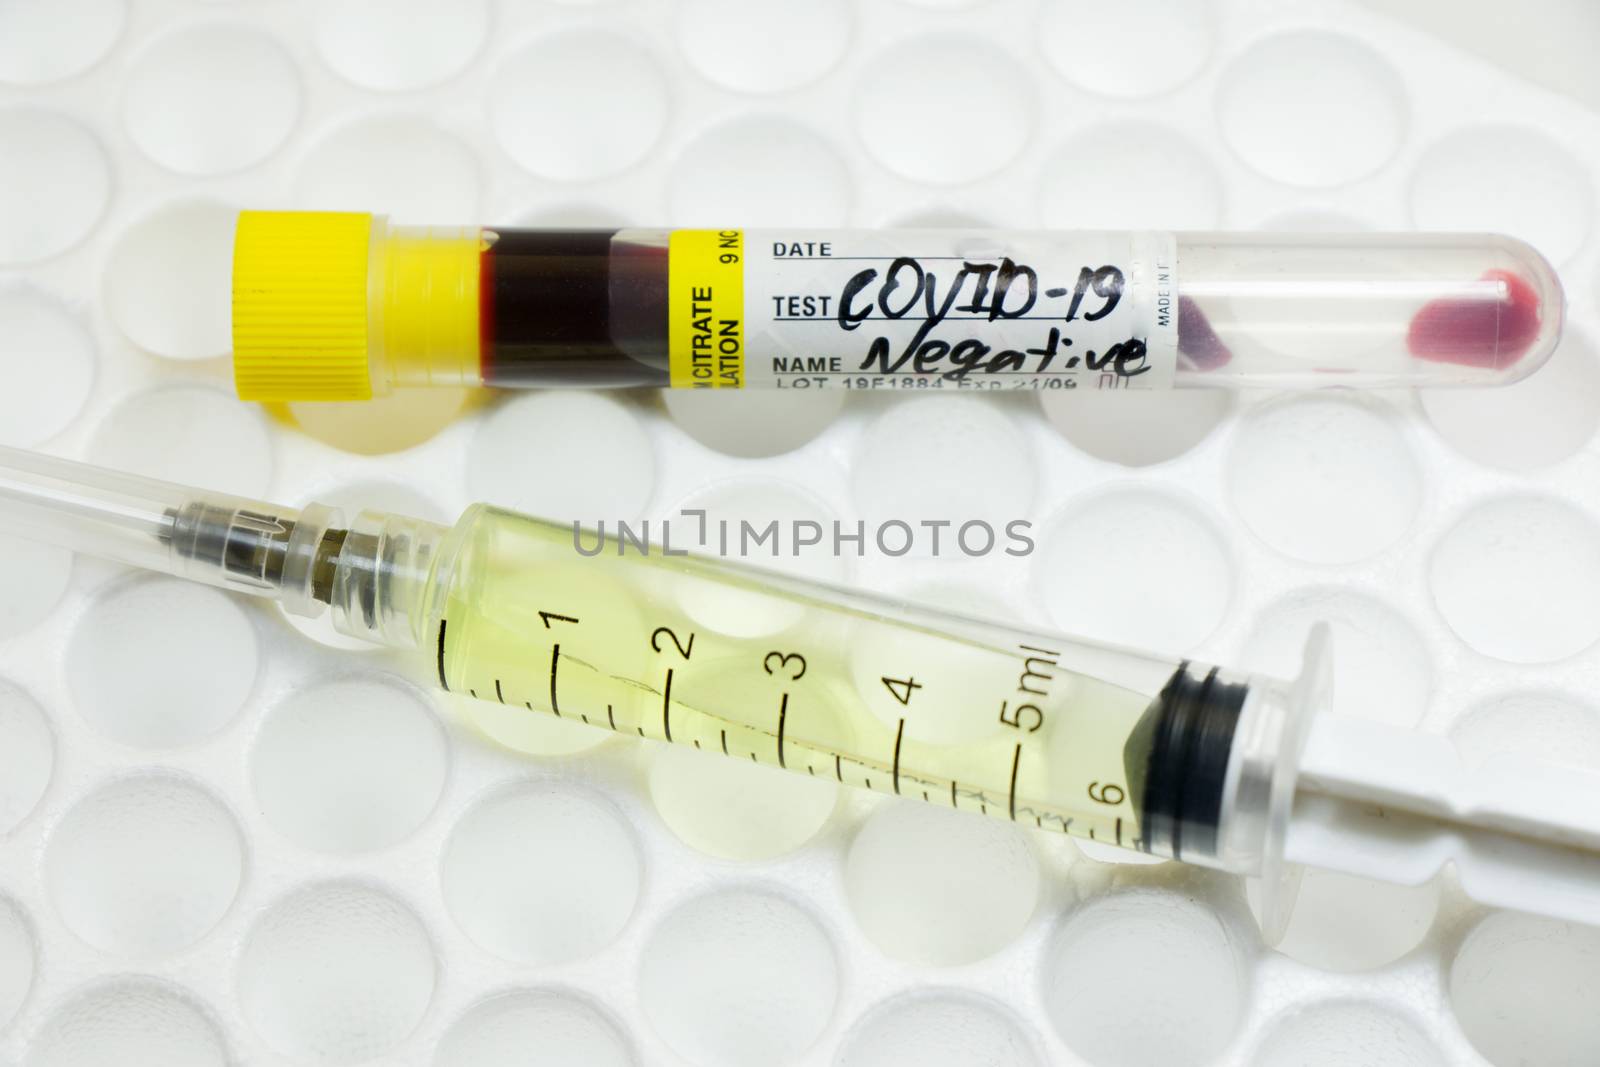 Medical needle and blood tube, corona virus or covid-19 vaccine. by Taidundua